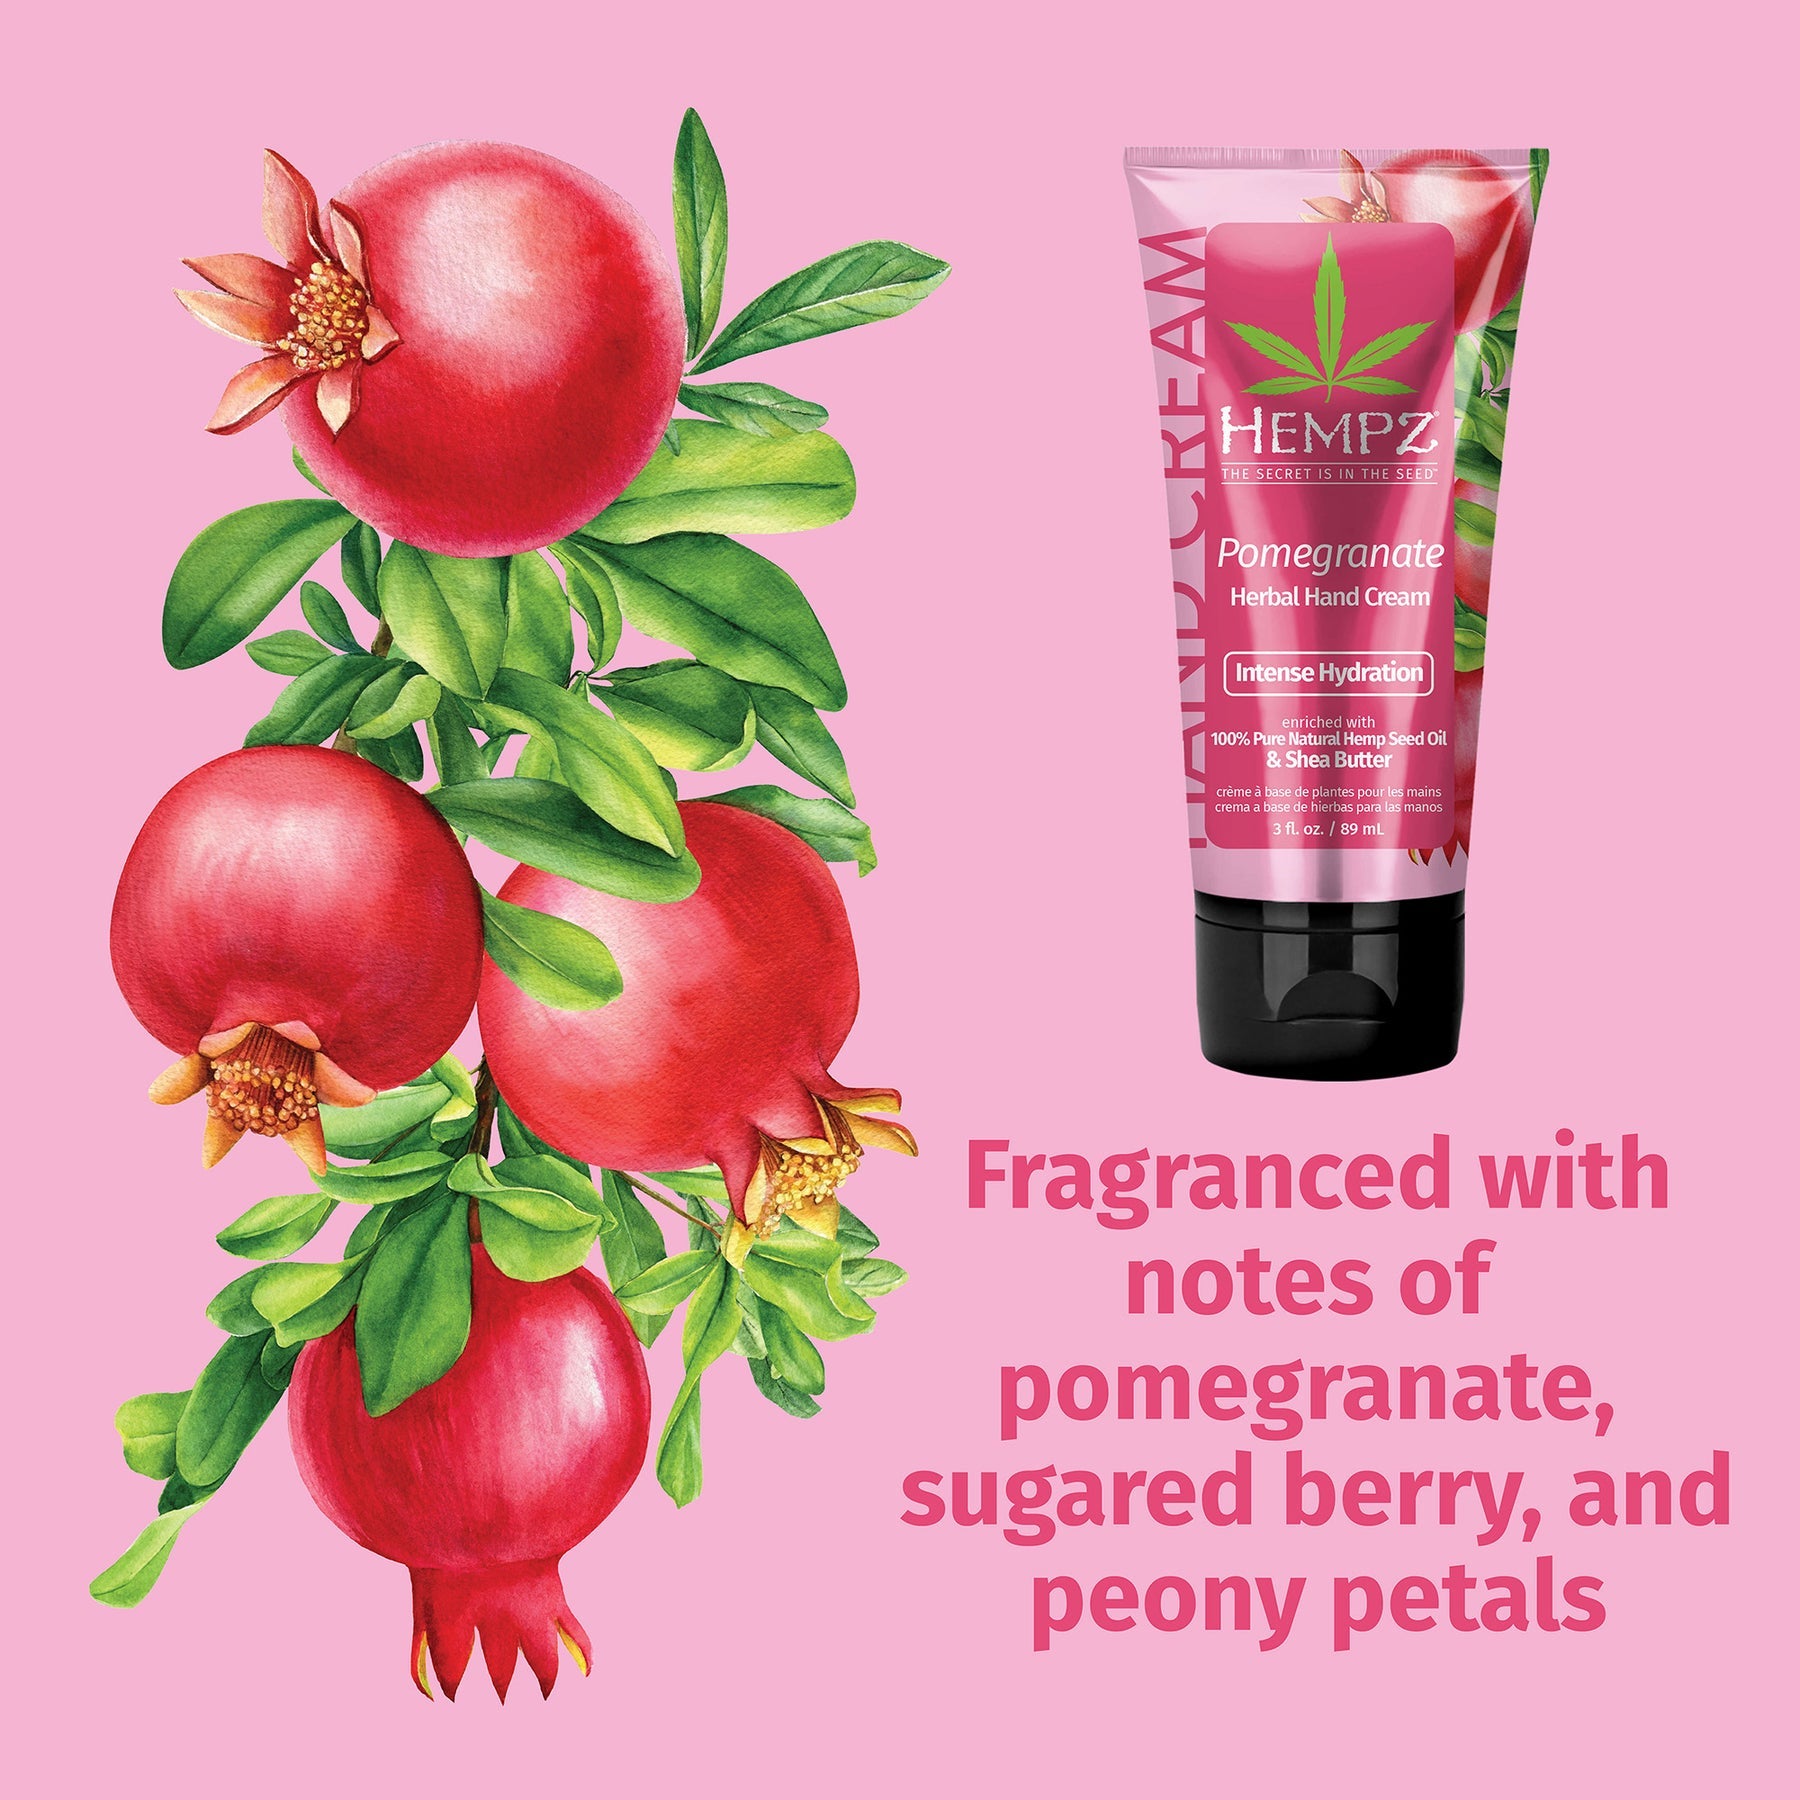 Hempz - Pomegranate Herbal Hand Cream - Creata Beauty - Professional Beauty Products